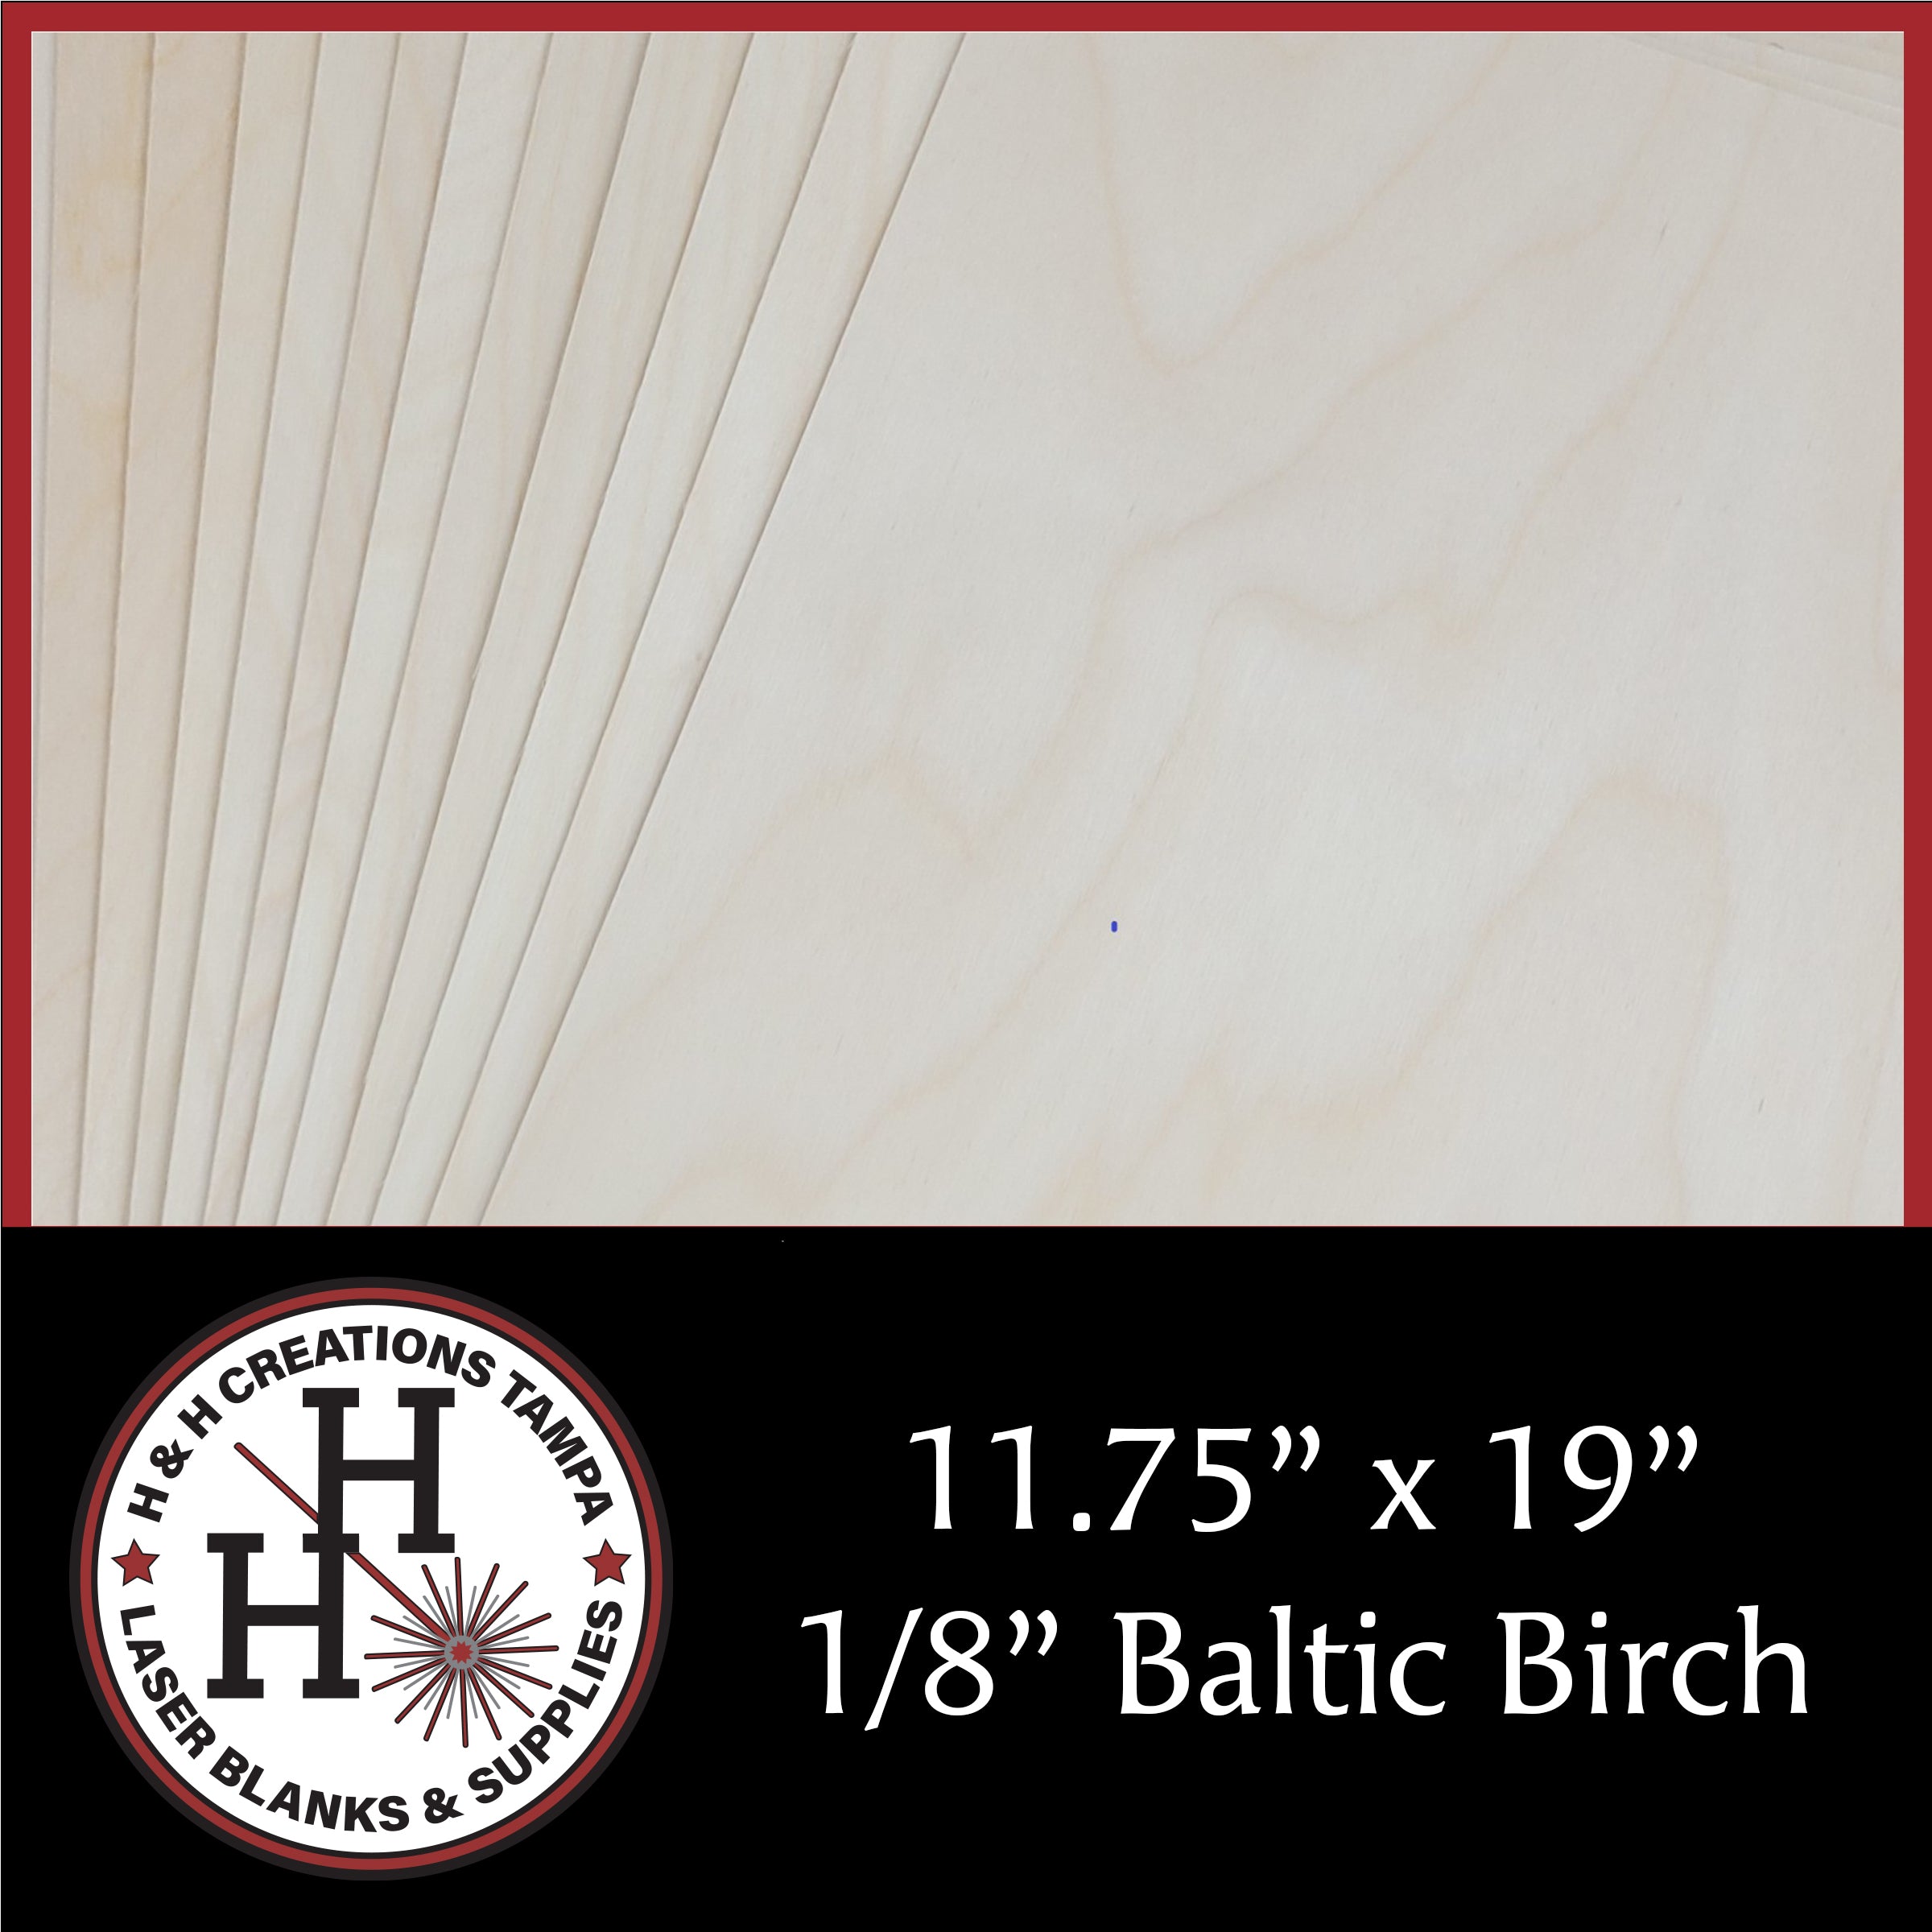 1 Set, 10 Inch X 1/8 Baltic Birch 0-9 Times New Roman Bold Wood